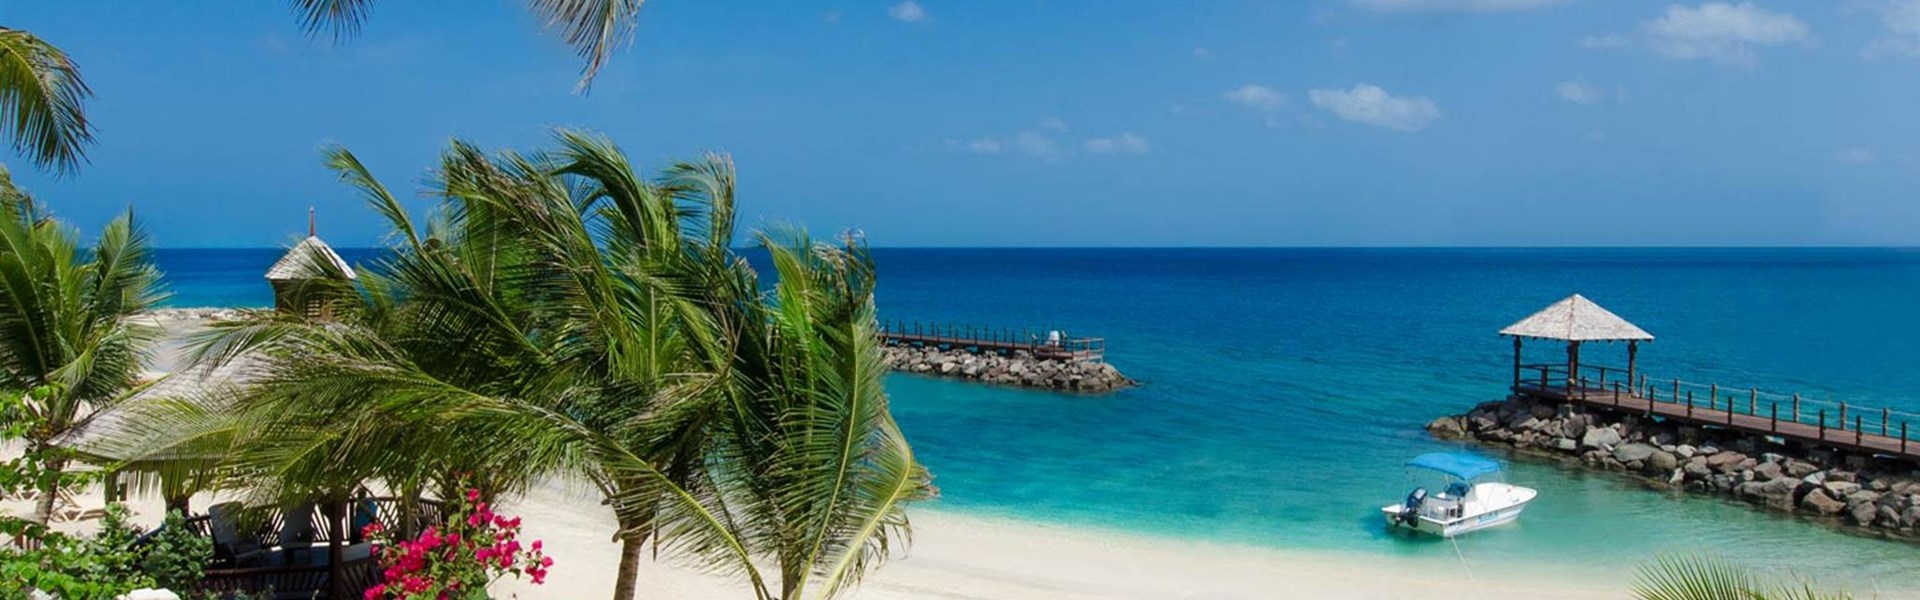 Marco Polo - Sandals Grenada Resort & Spa - 